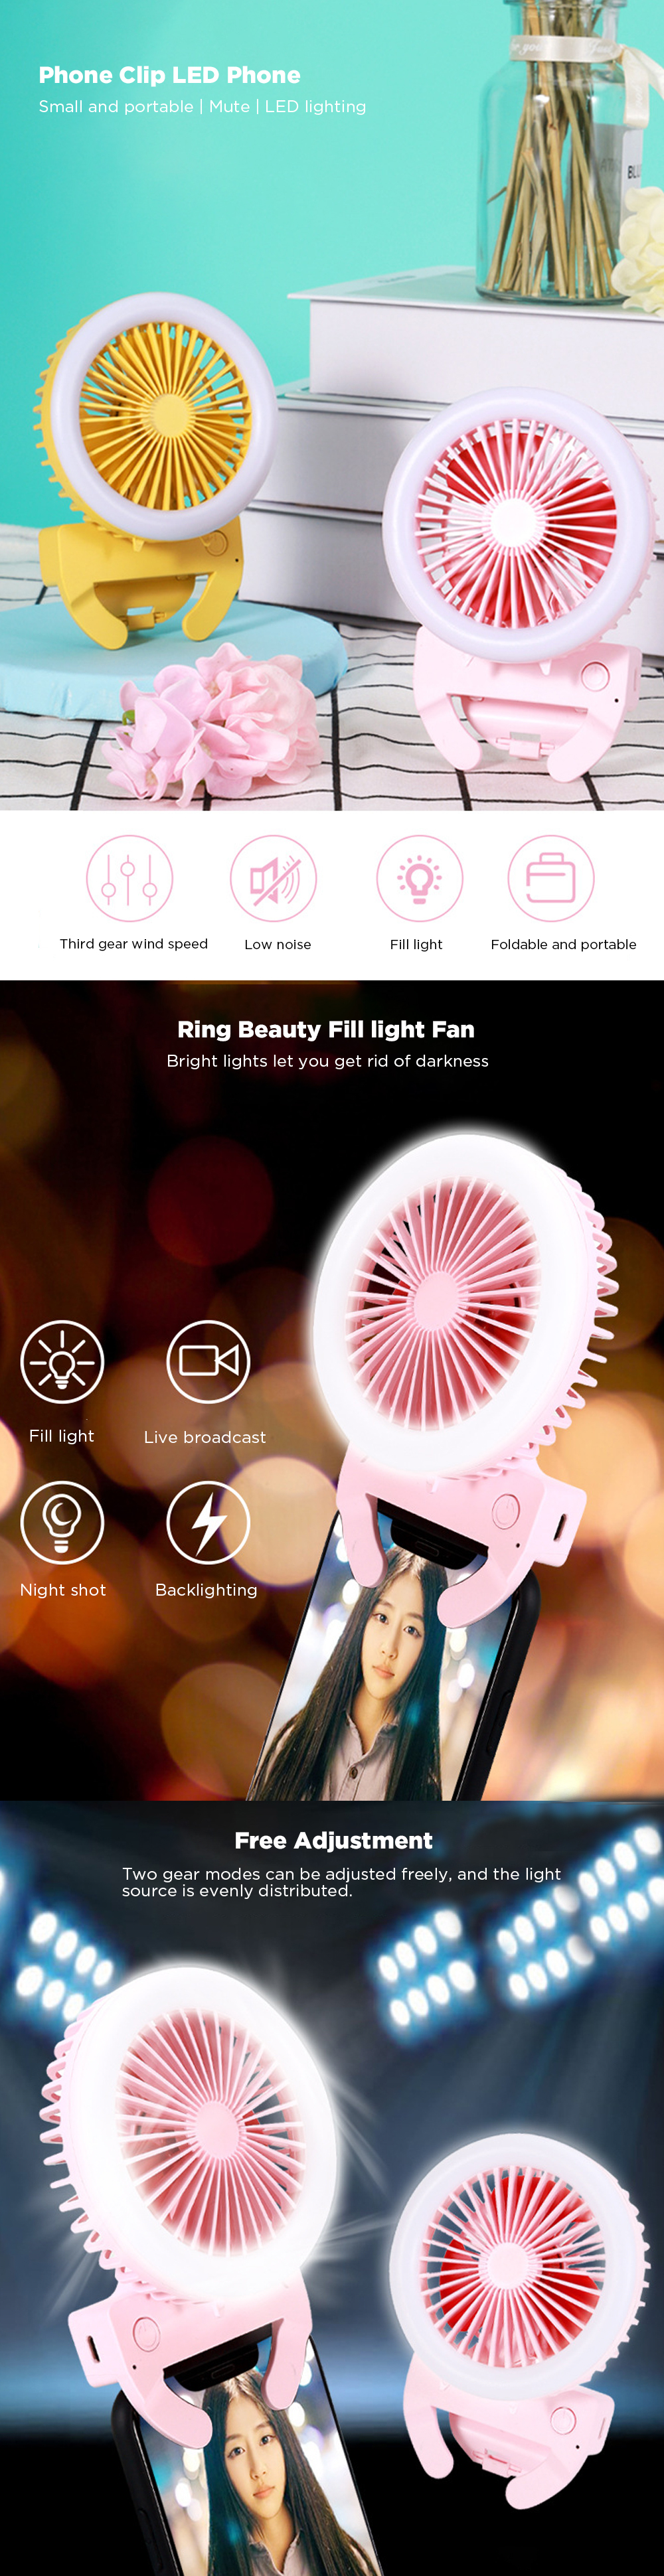 Handheld-Phone-Clip-LED-Fan-Mini-Folding-180deg-Rotation-2-Modes-Fill-Light-3-Speed-Wind-Fan-Make-up-1678283-1